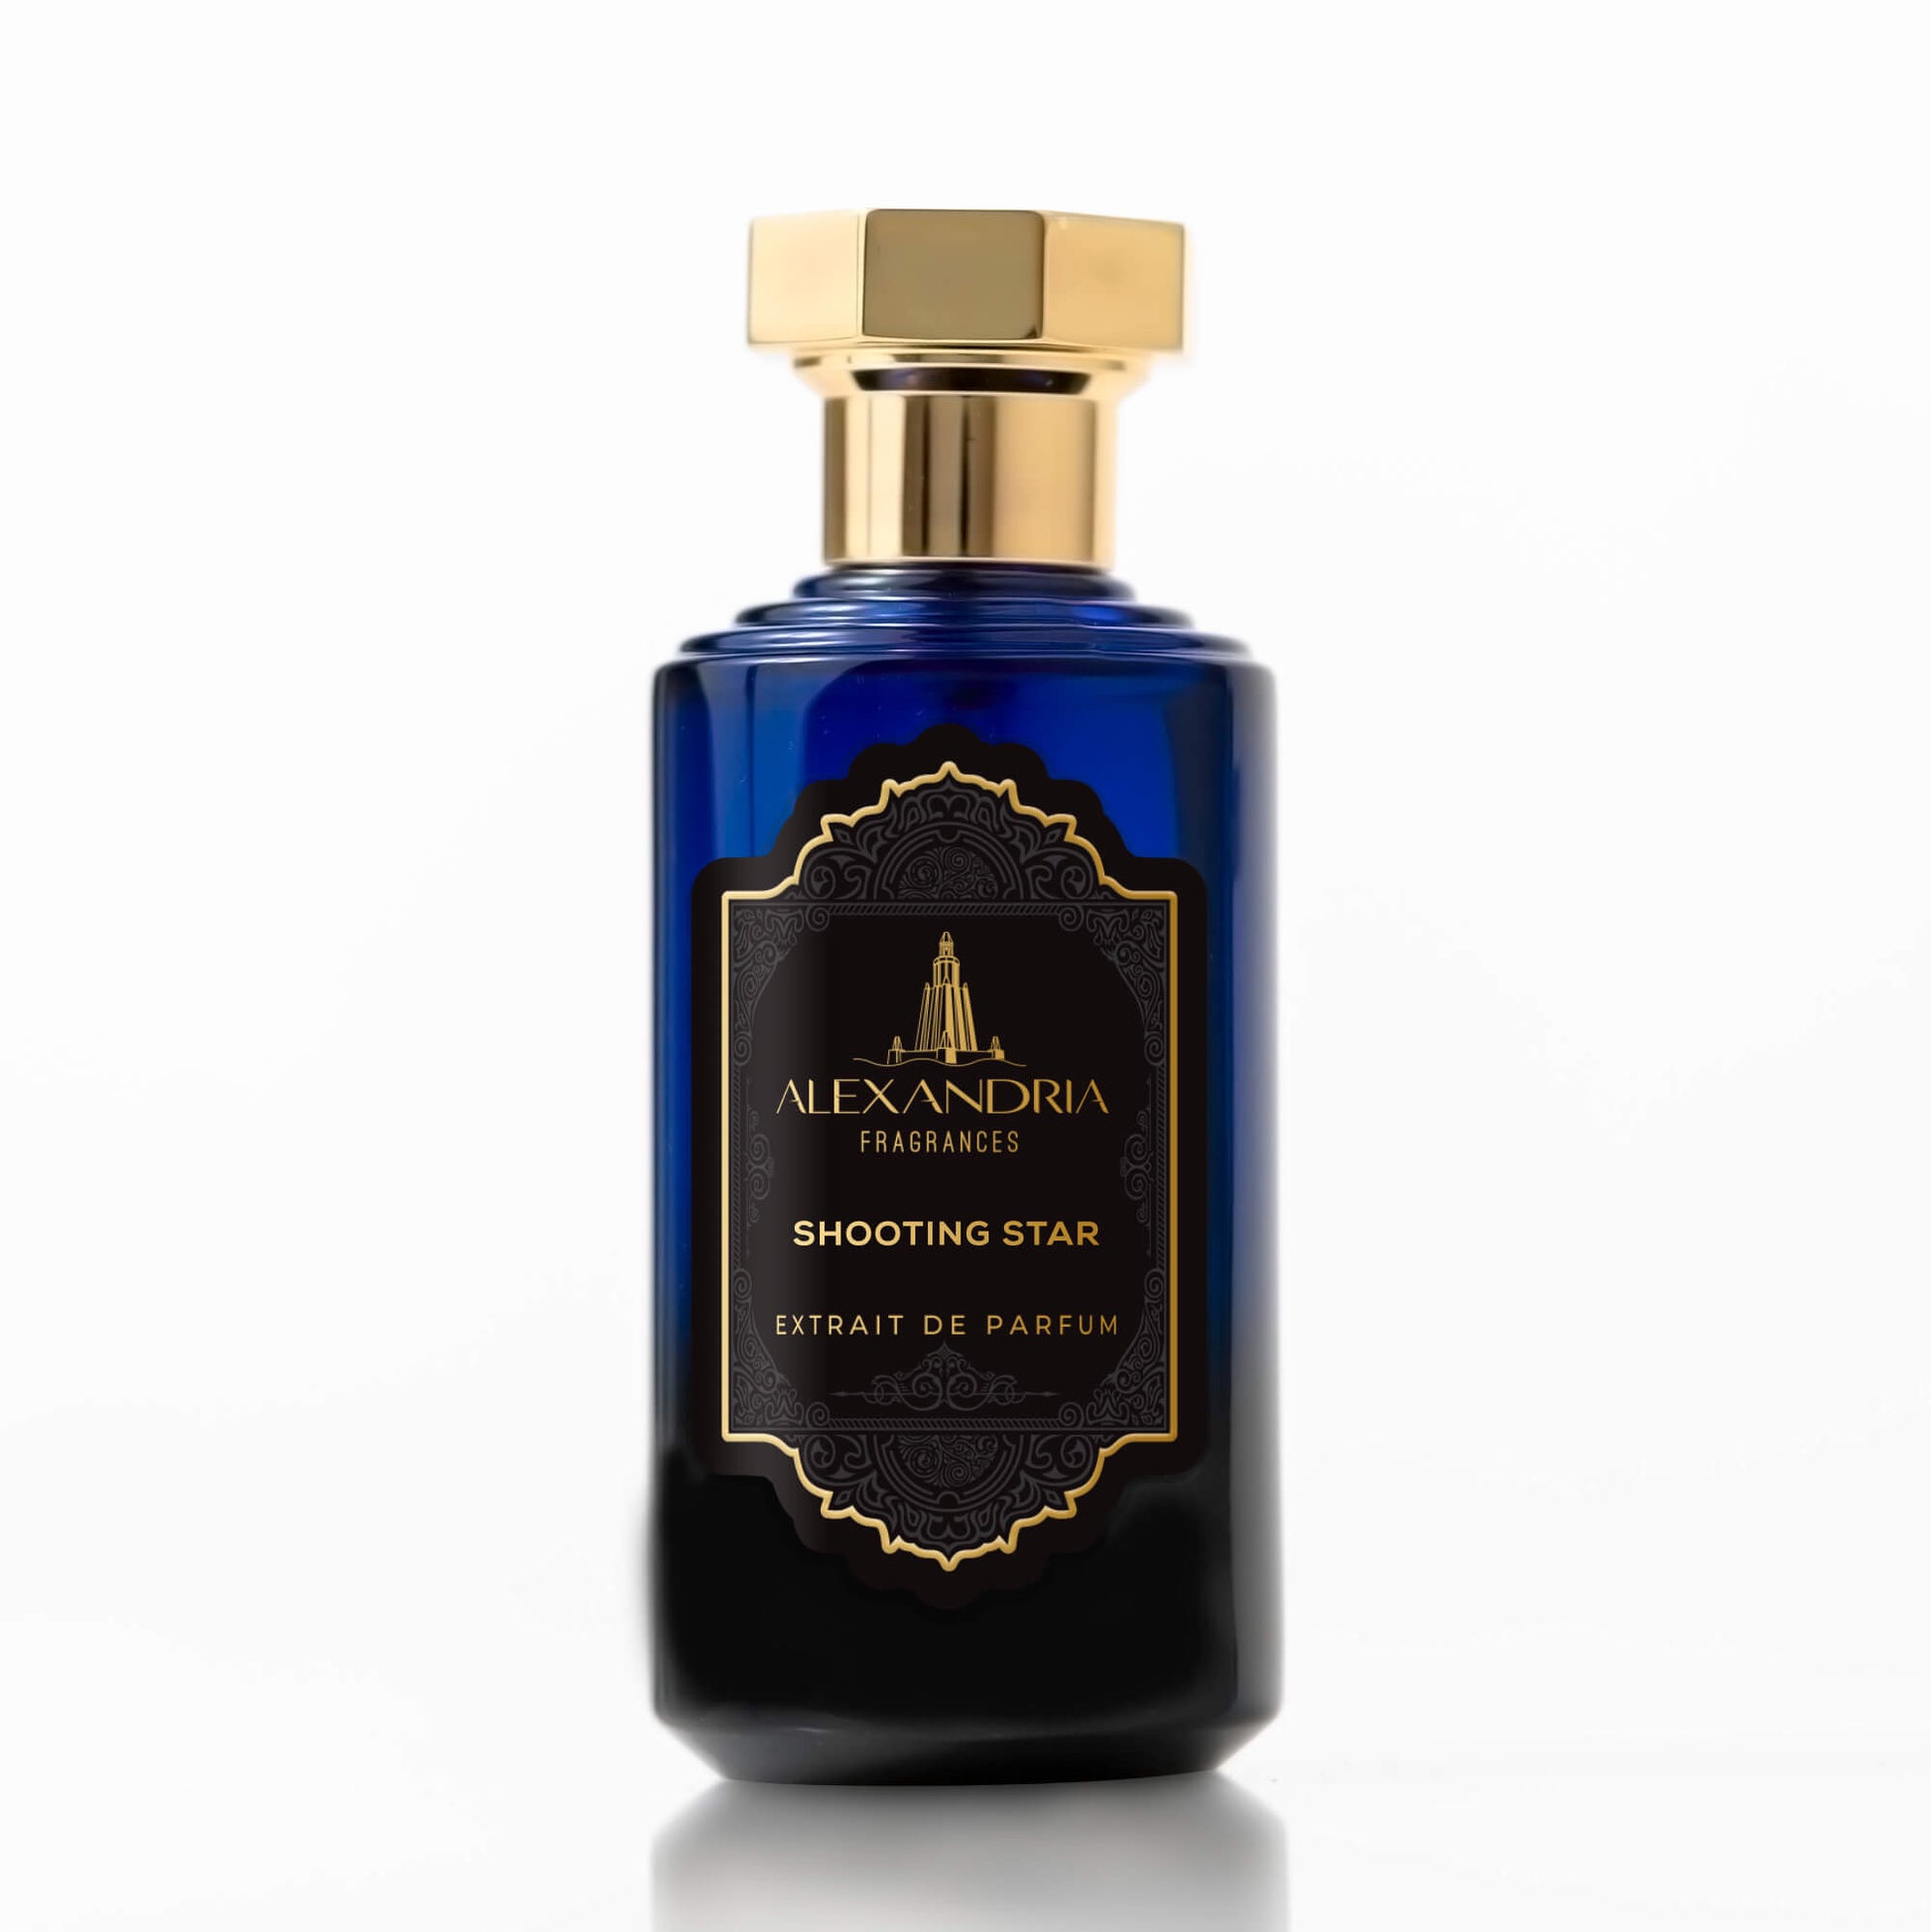 LOUIS VUITTON fragrance review ETOILE FILANTE - LV perfume - Can